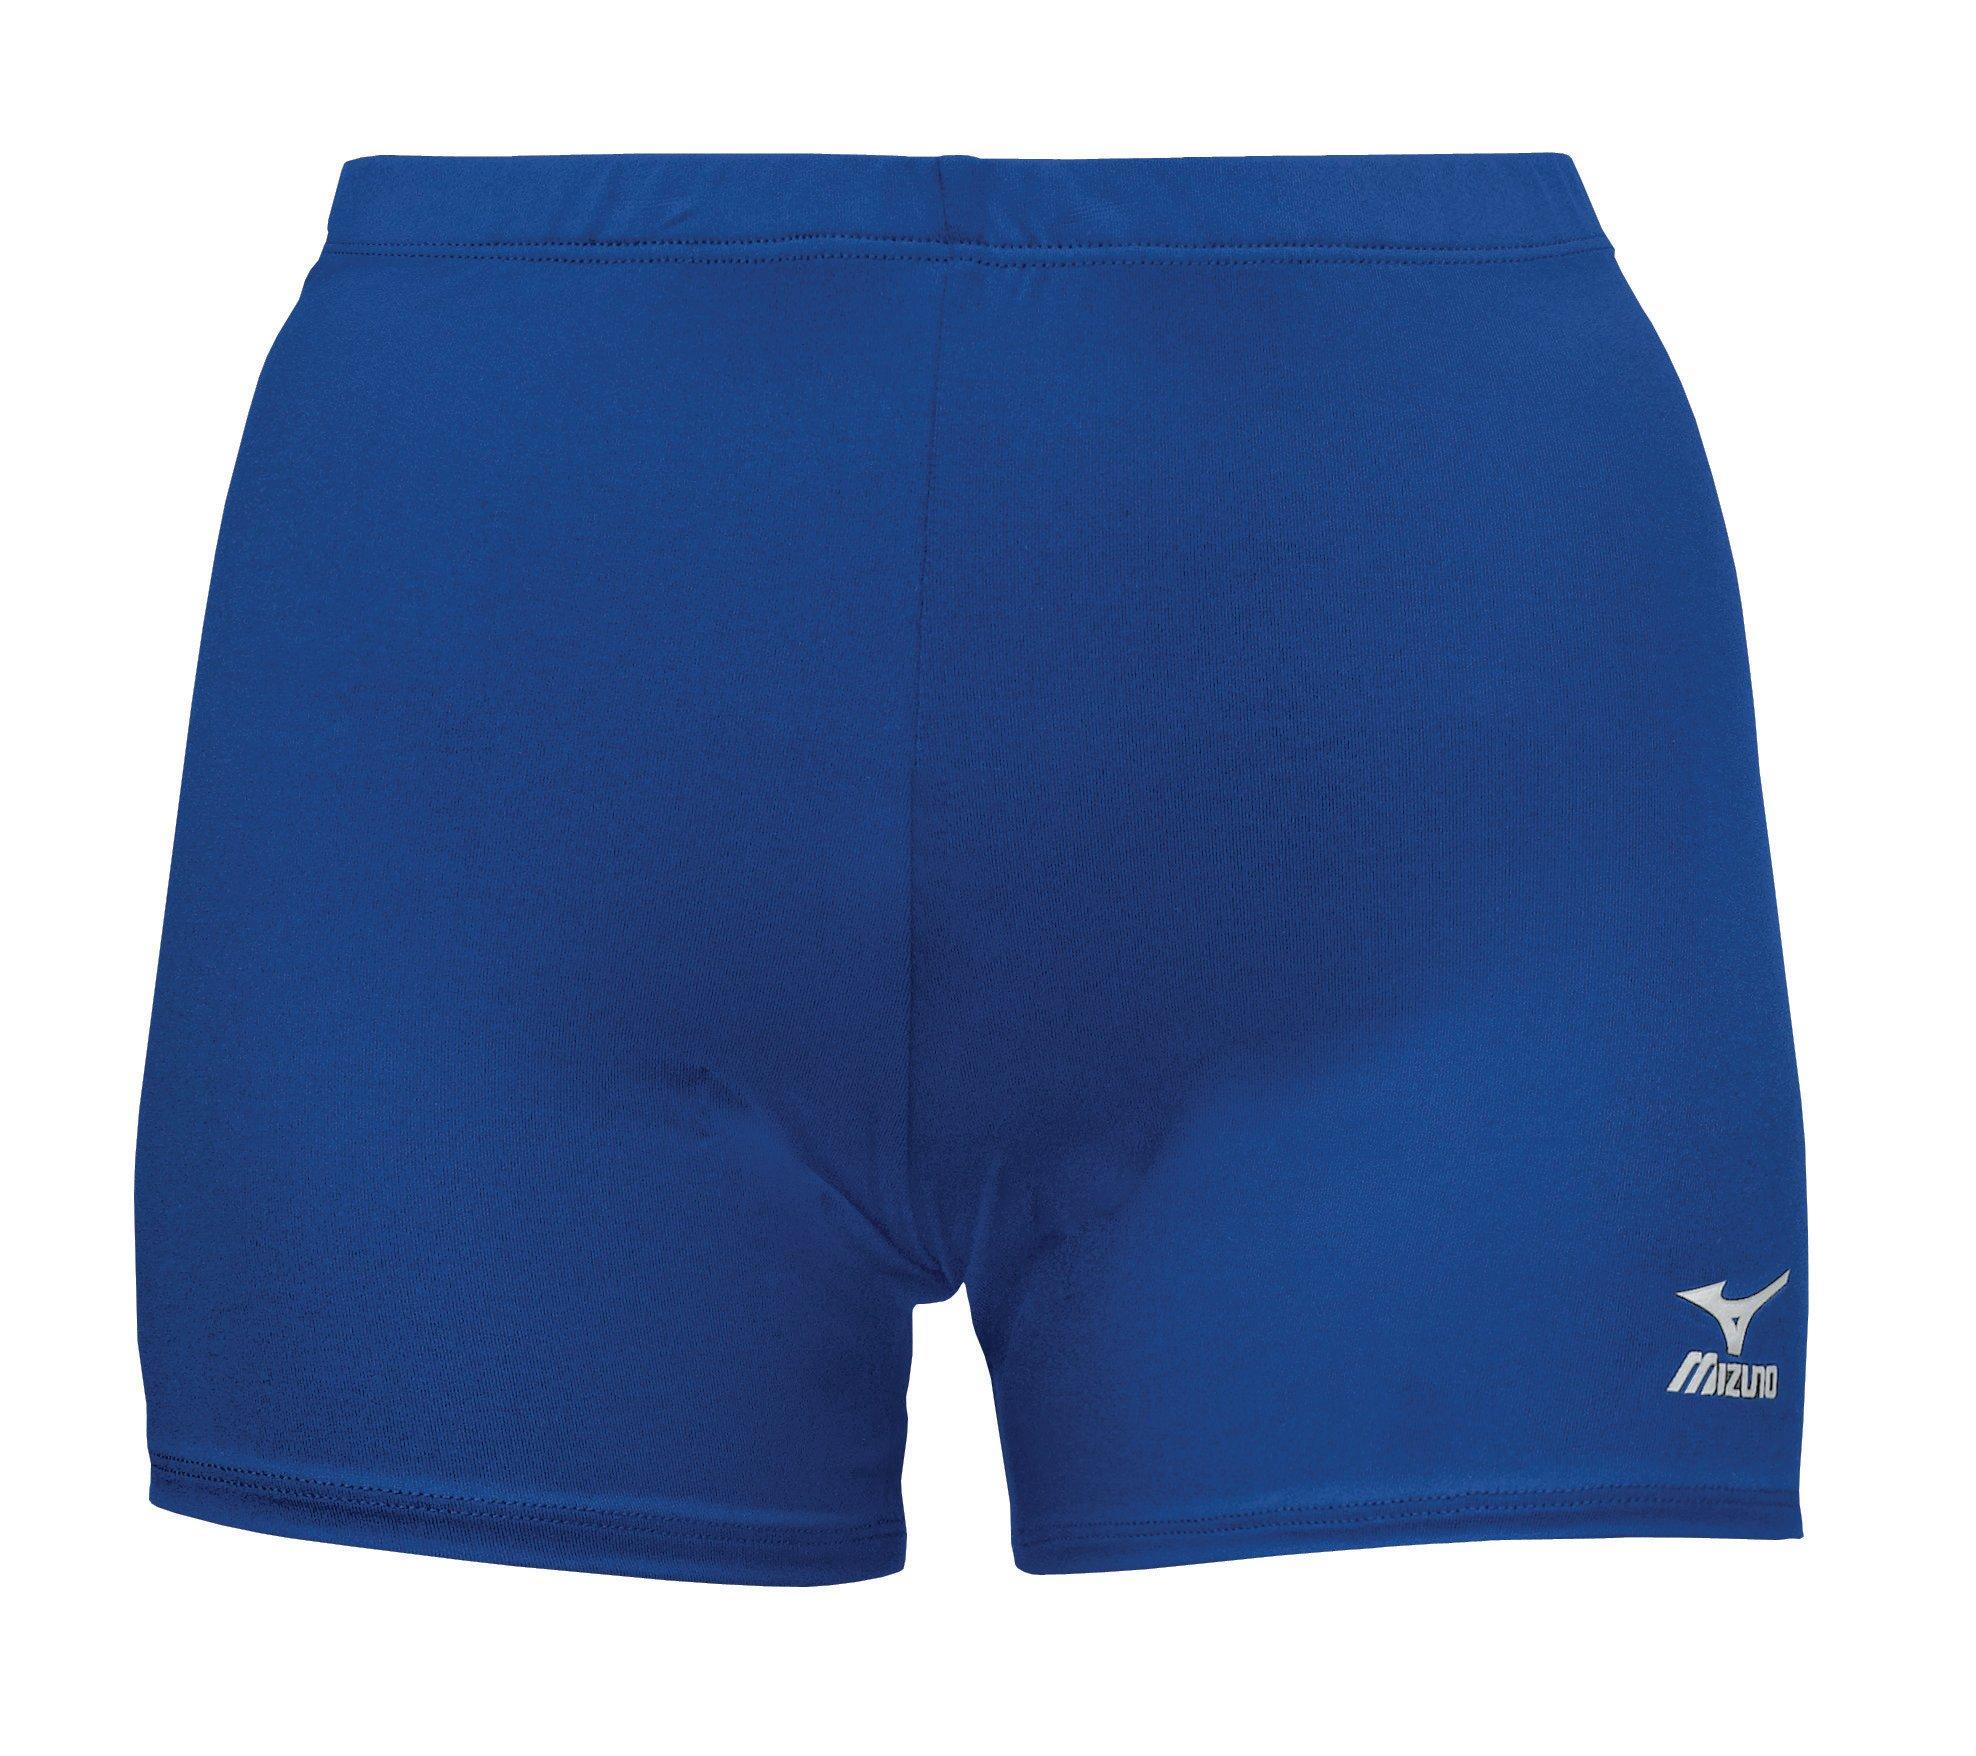 mizuno spandex volleyball shorts